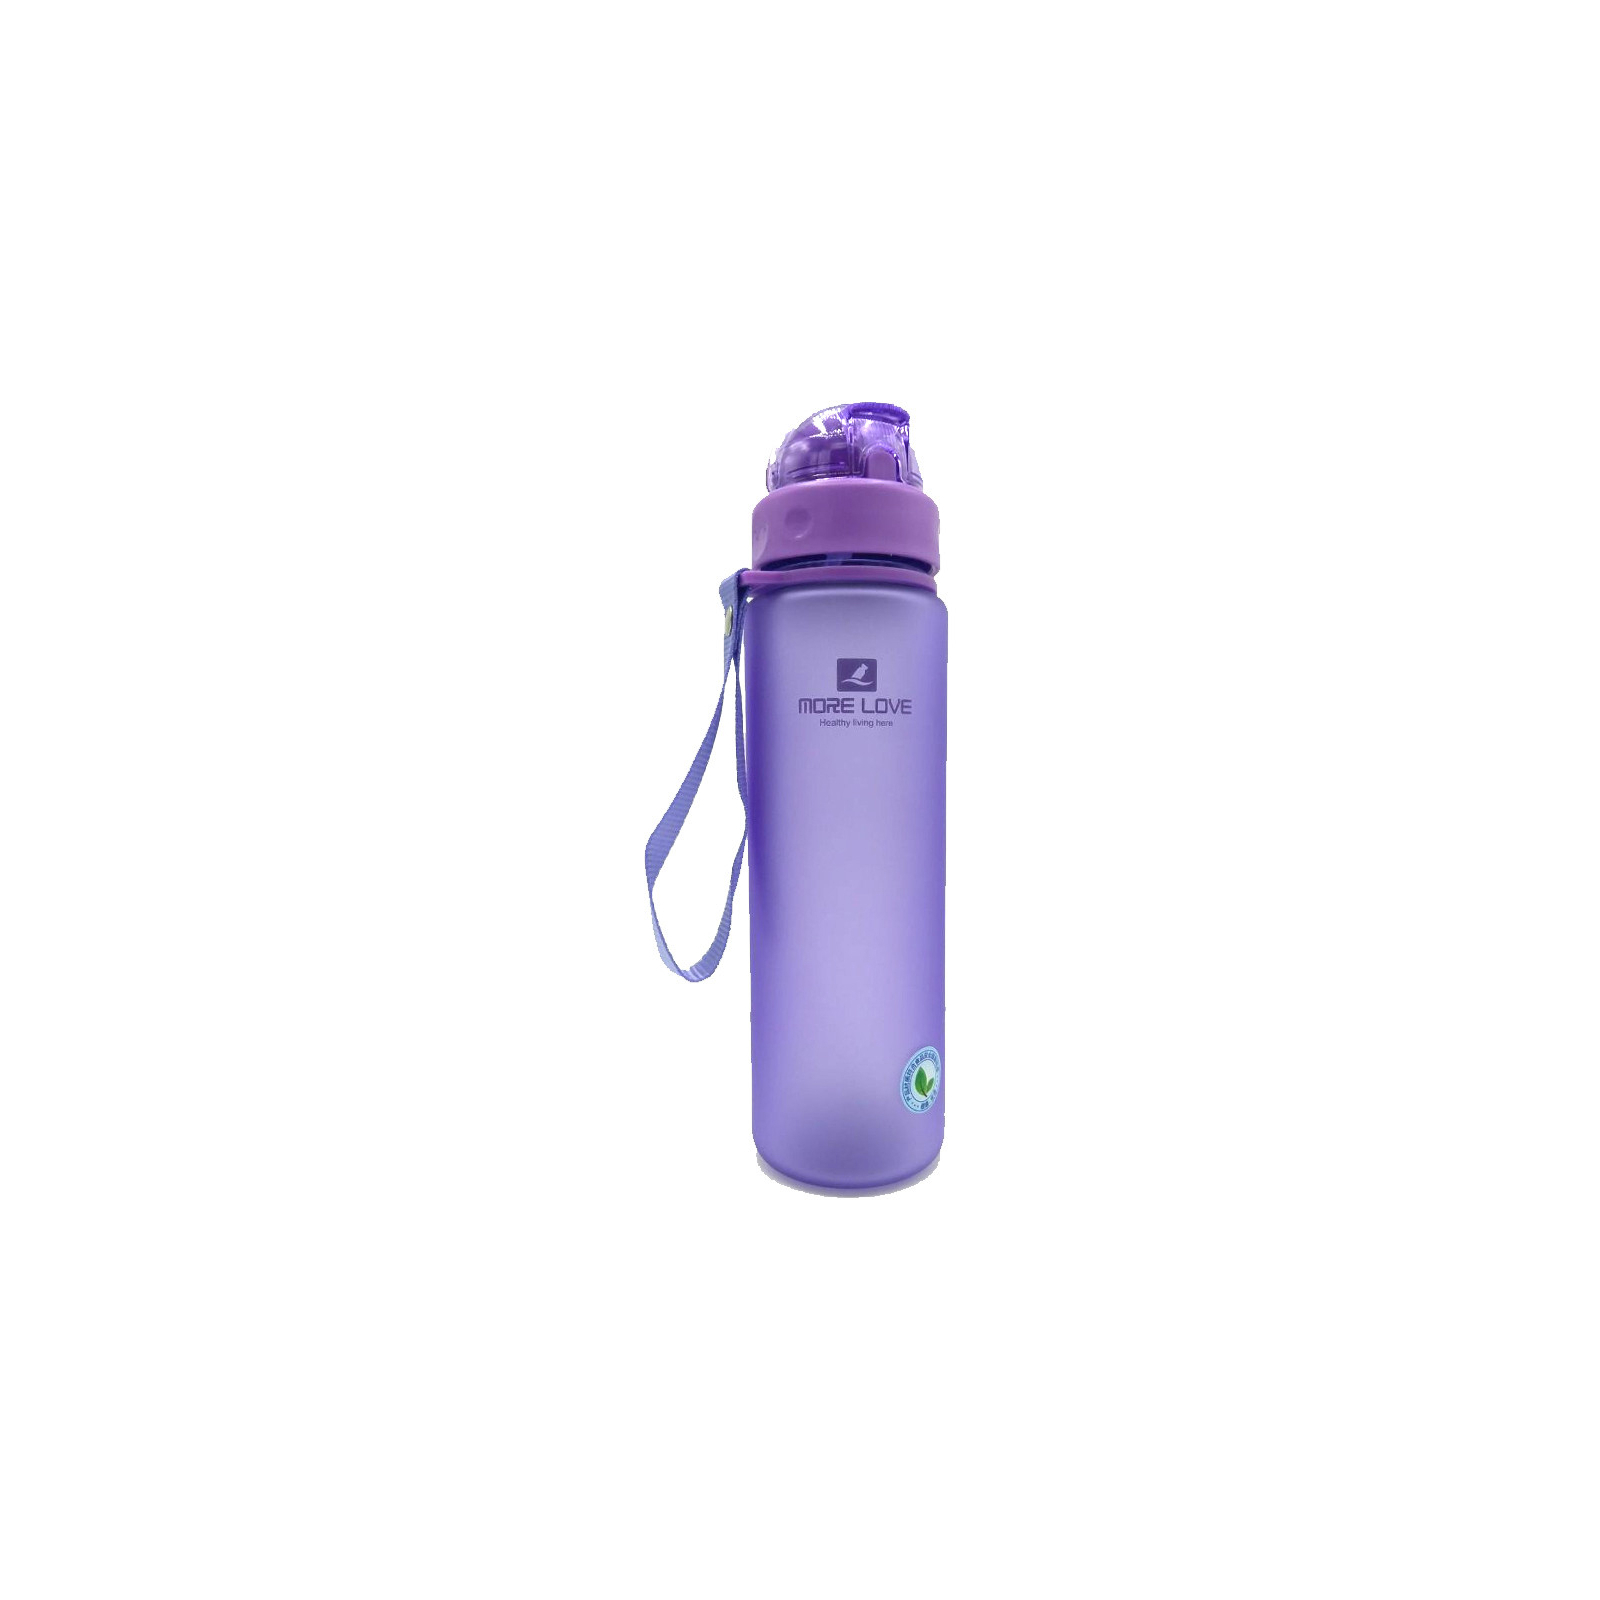 Бутылка для воды Casno 560 мл MX-5029 Фіолетова (MX-5029_Purple) изображение 2